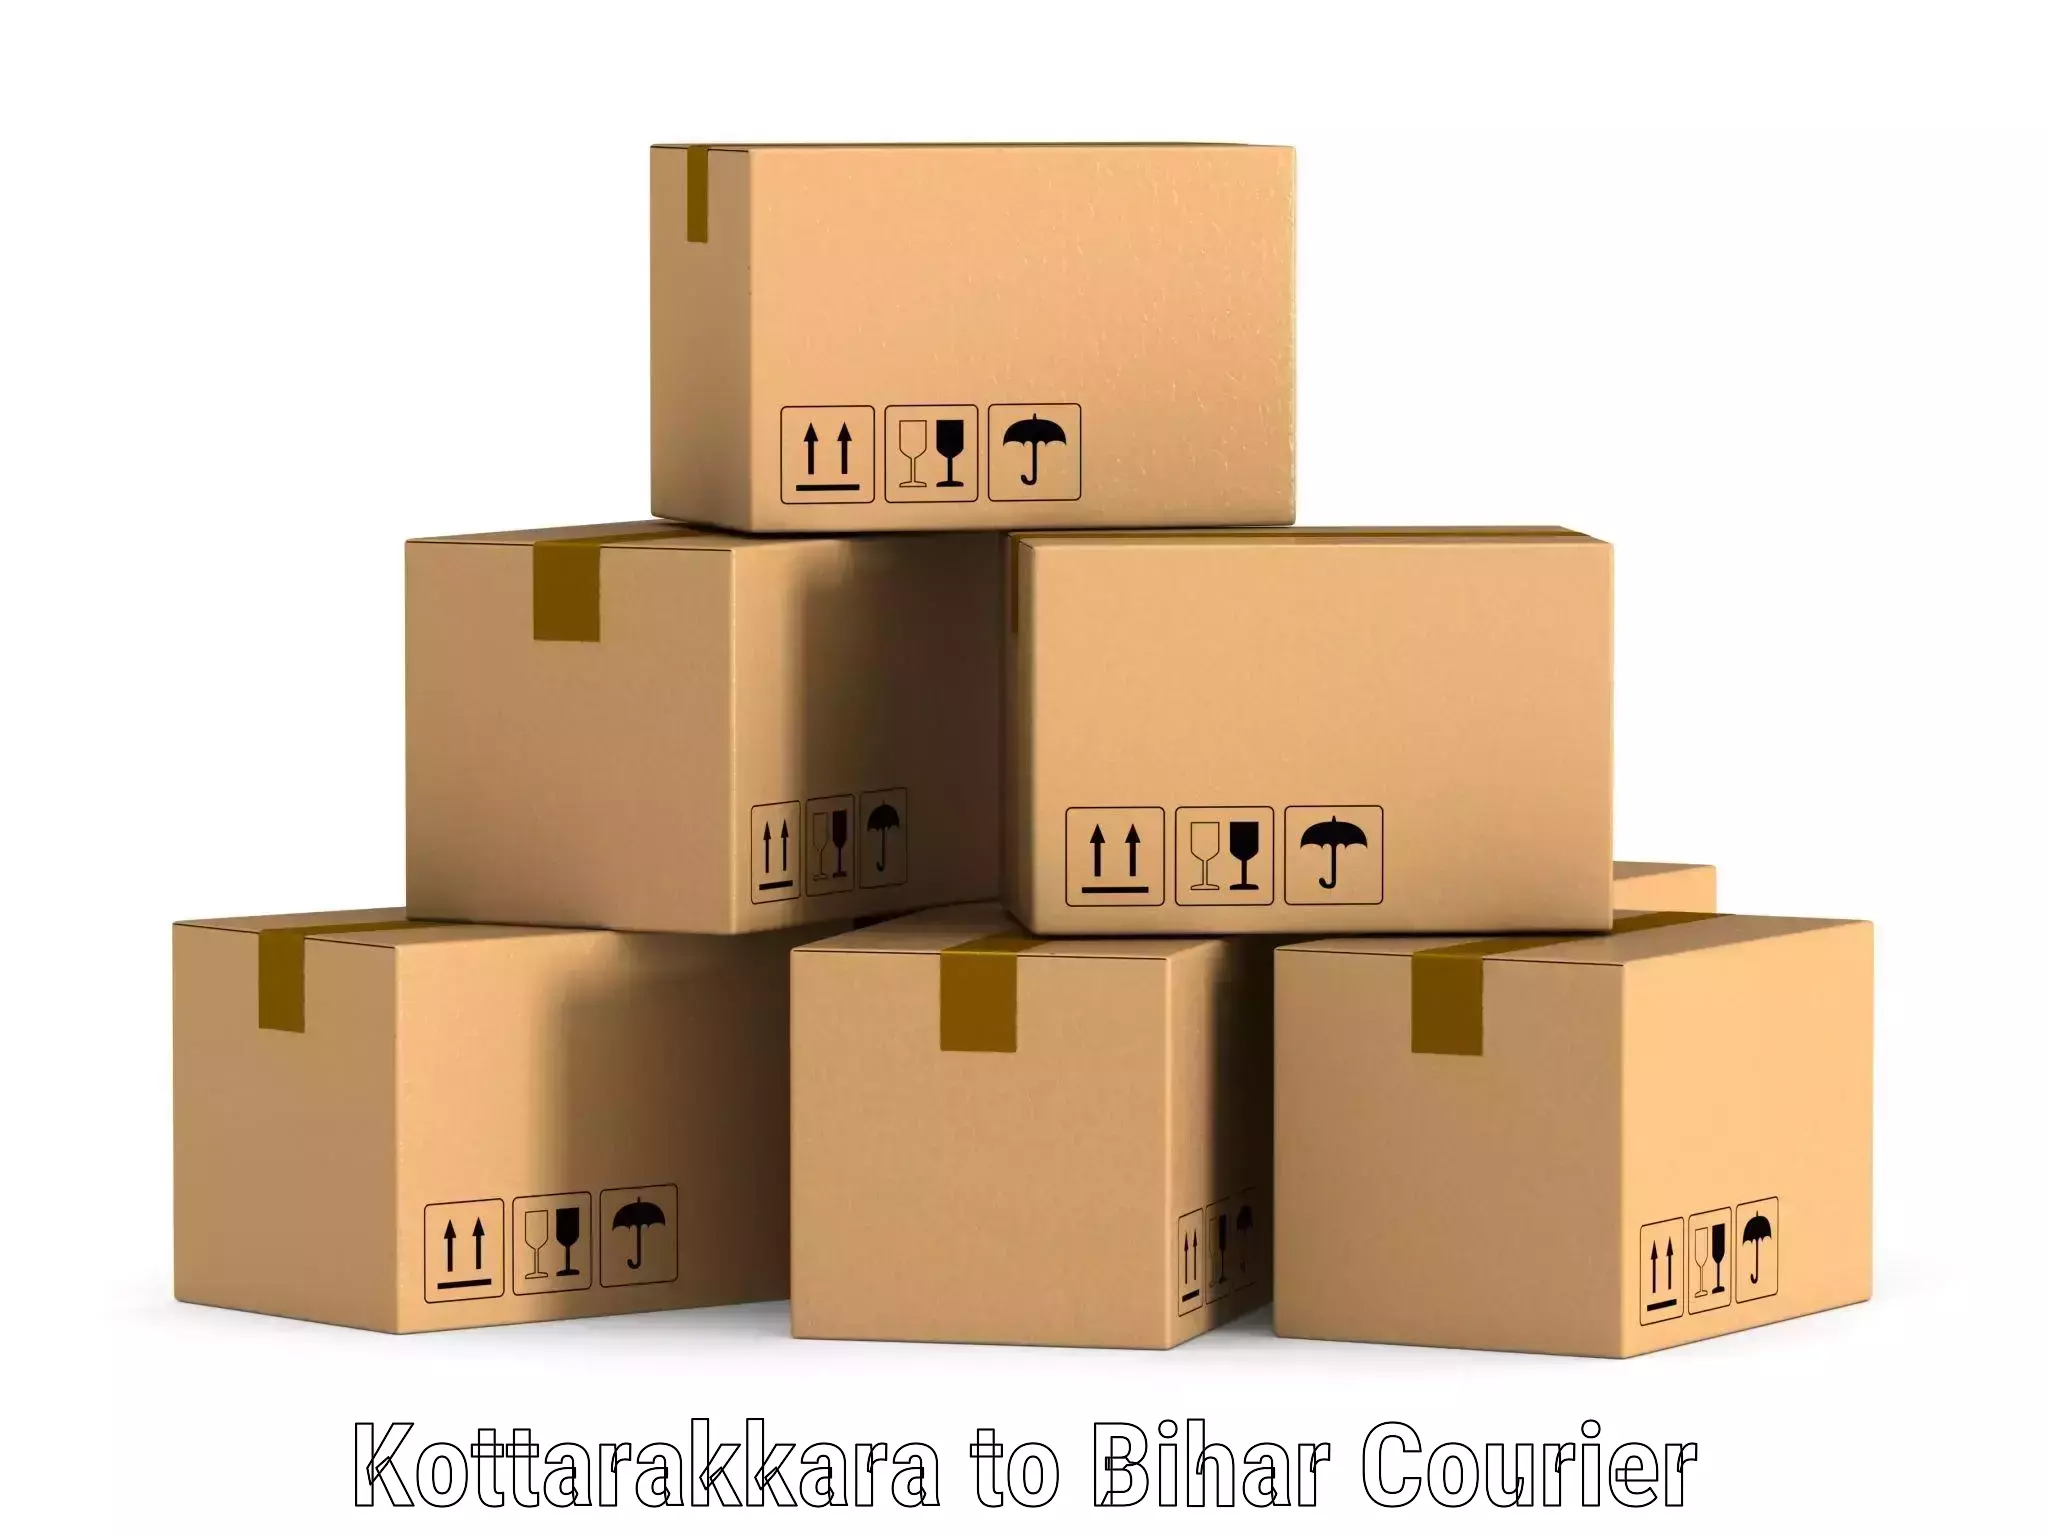 Courier service innovation Kottarakkara to Madhubani